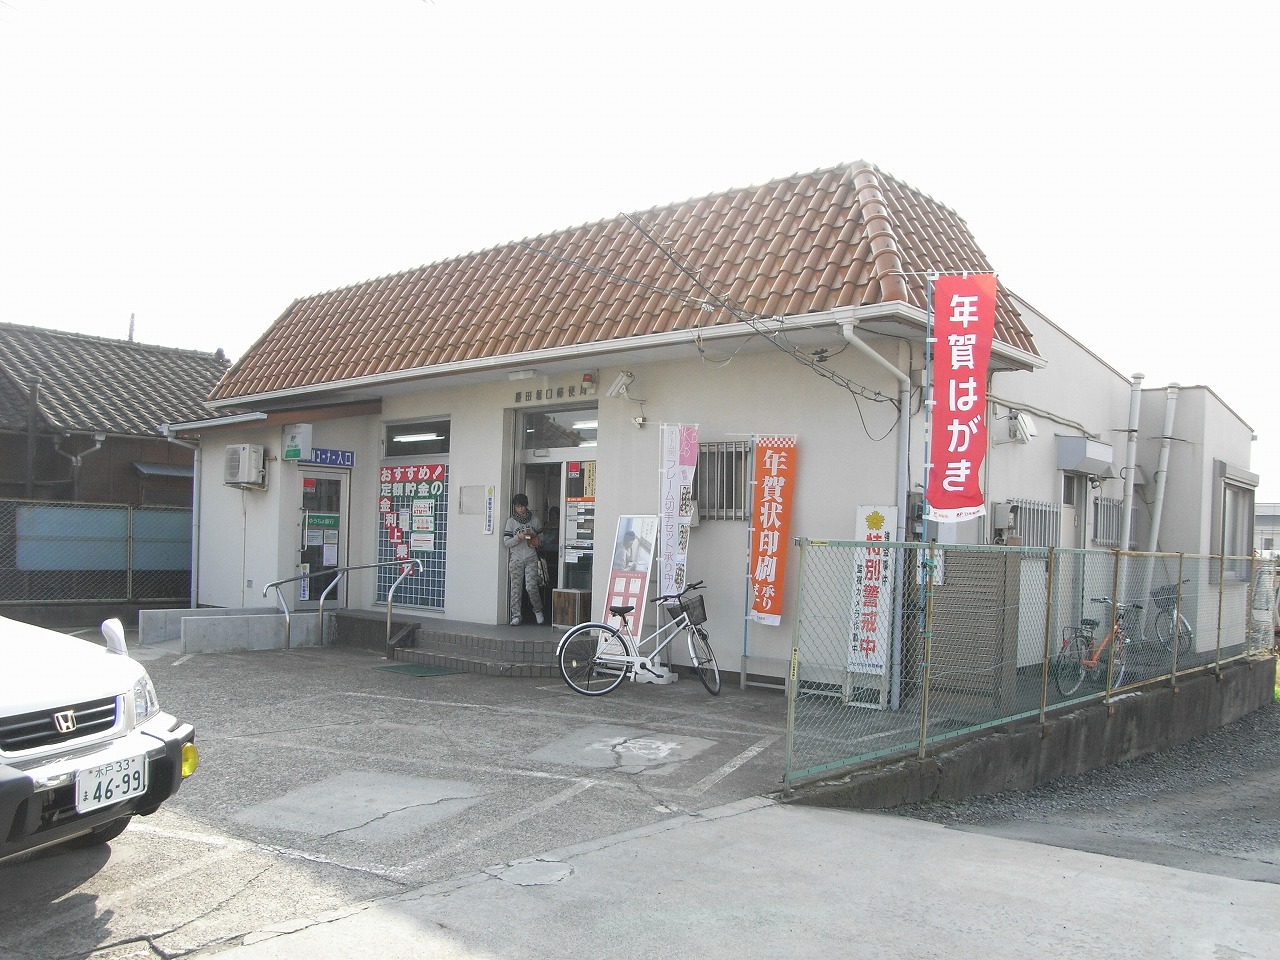 post office. Katsuta Horiguchi 2000m to the post office (post office)